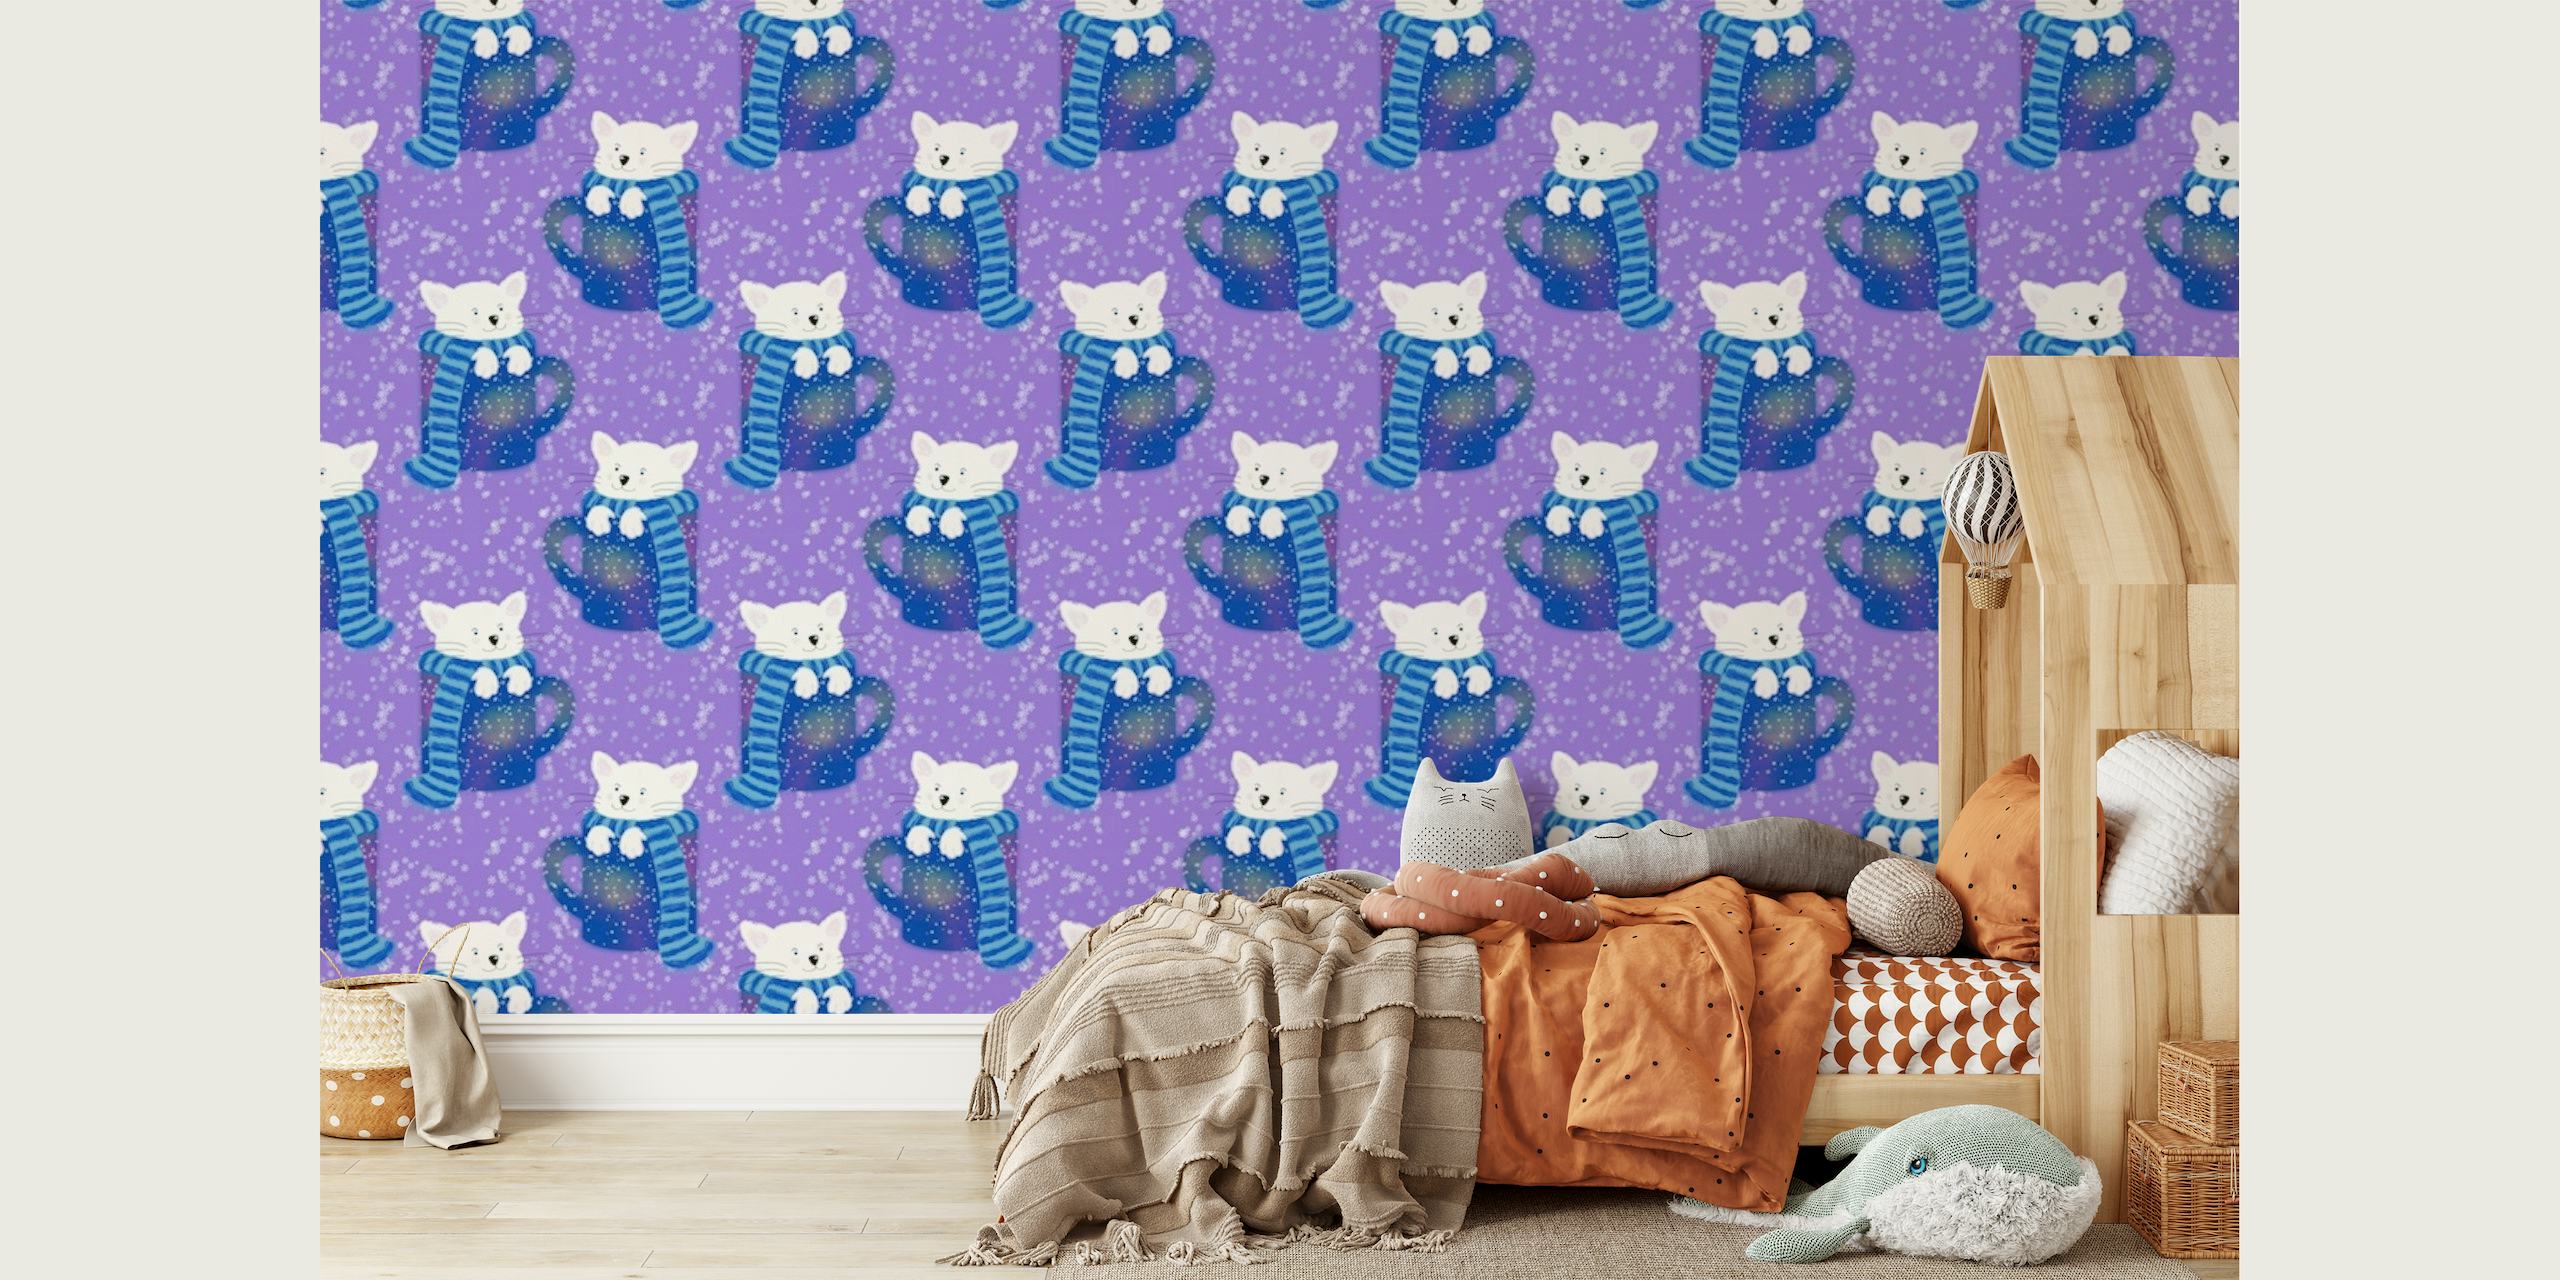 Fototapeta Rozkošné kočky ve vzoru šálků na fialovém pozadí